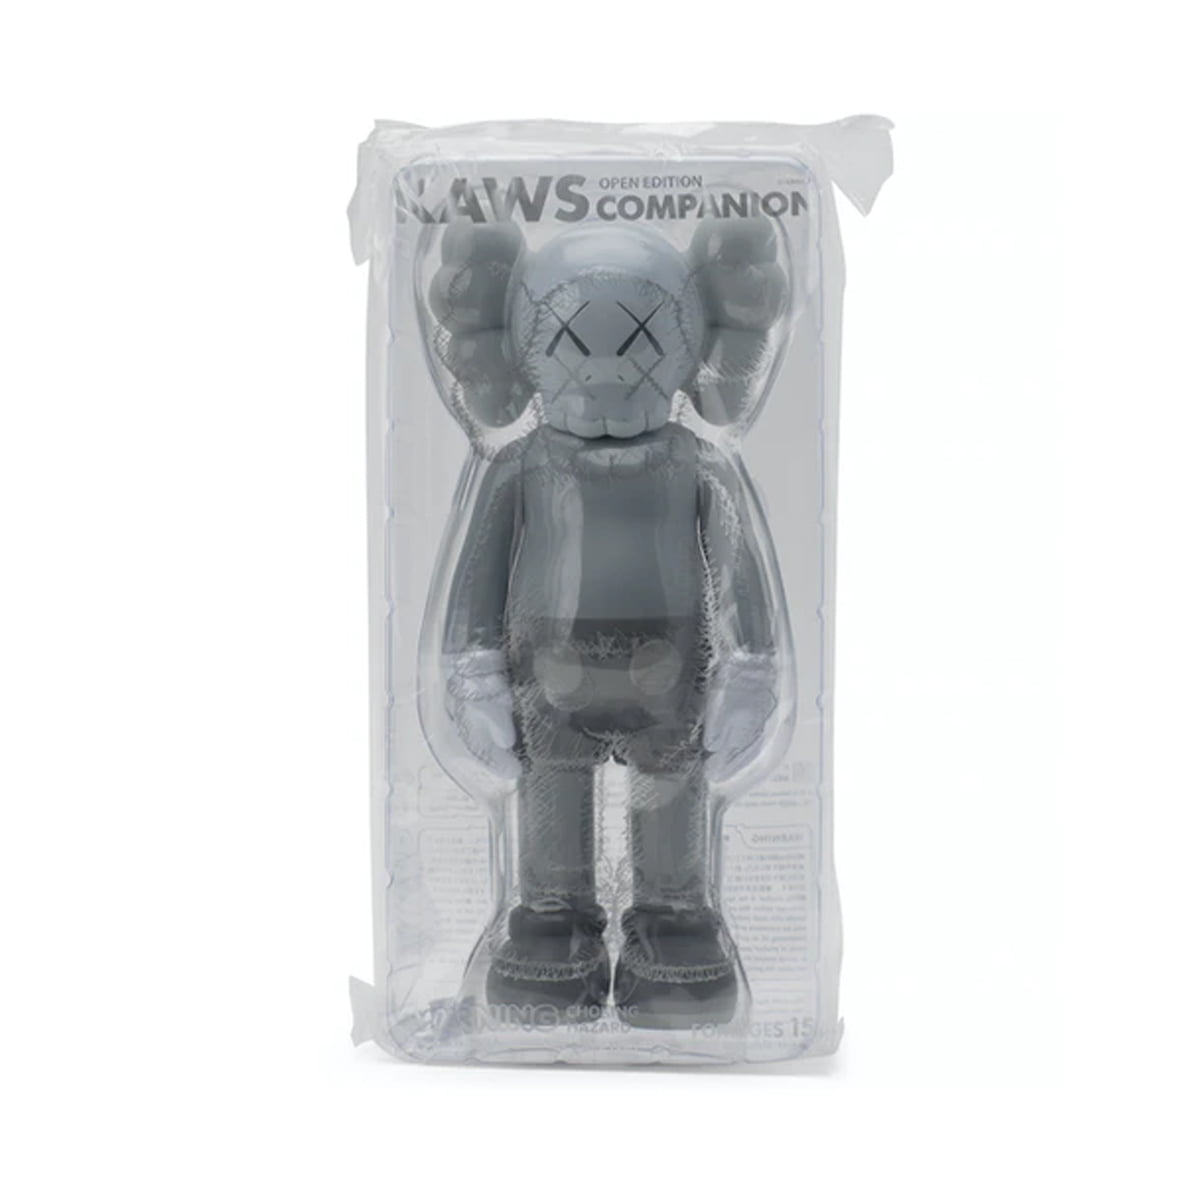 KAWS - Companion Grey packaging